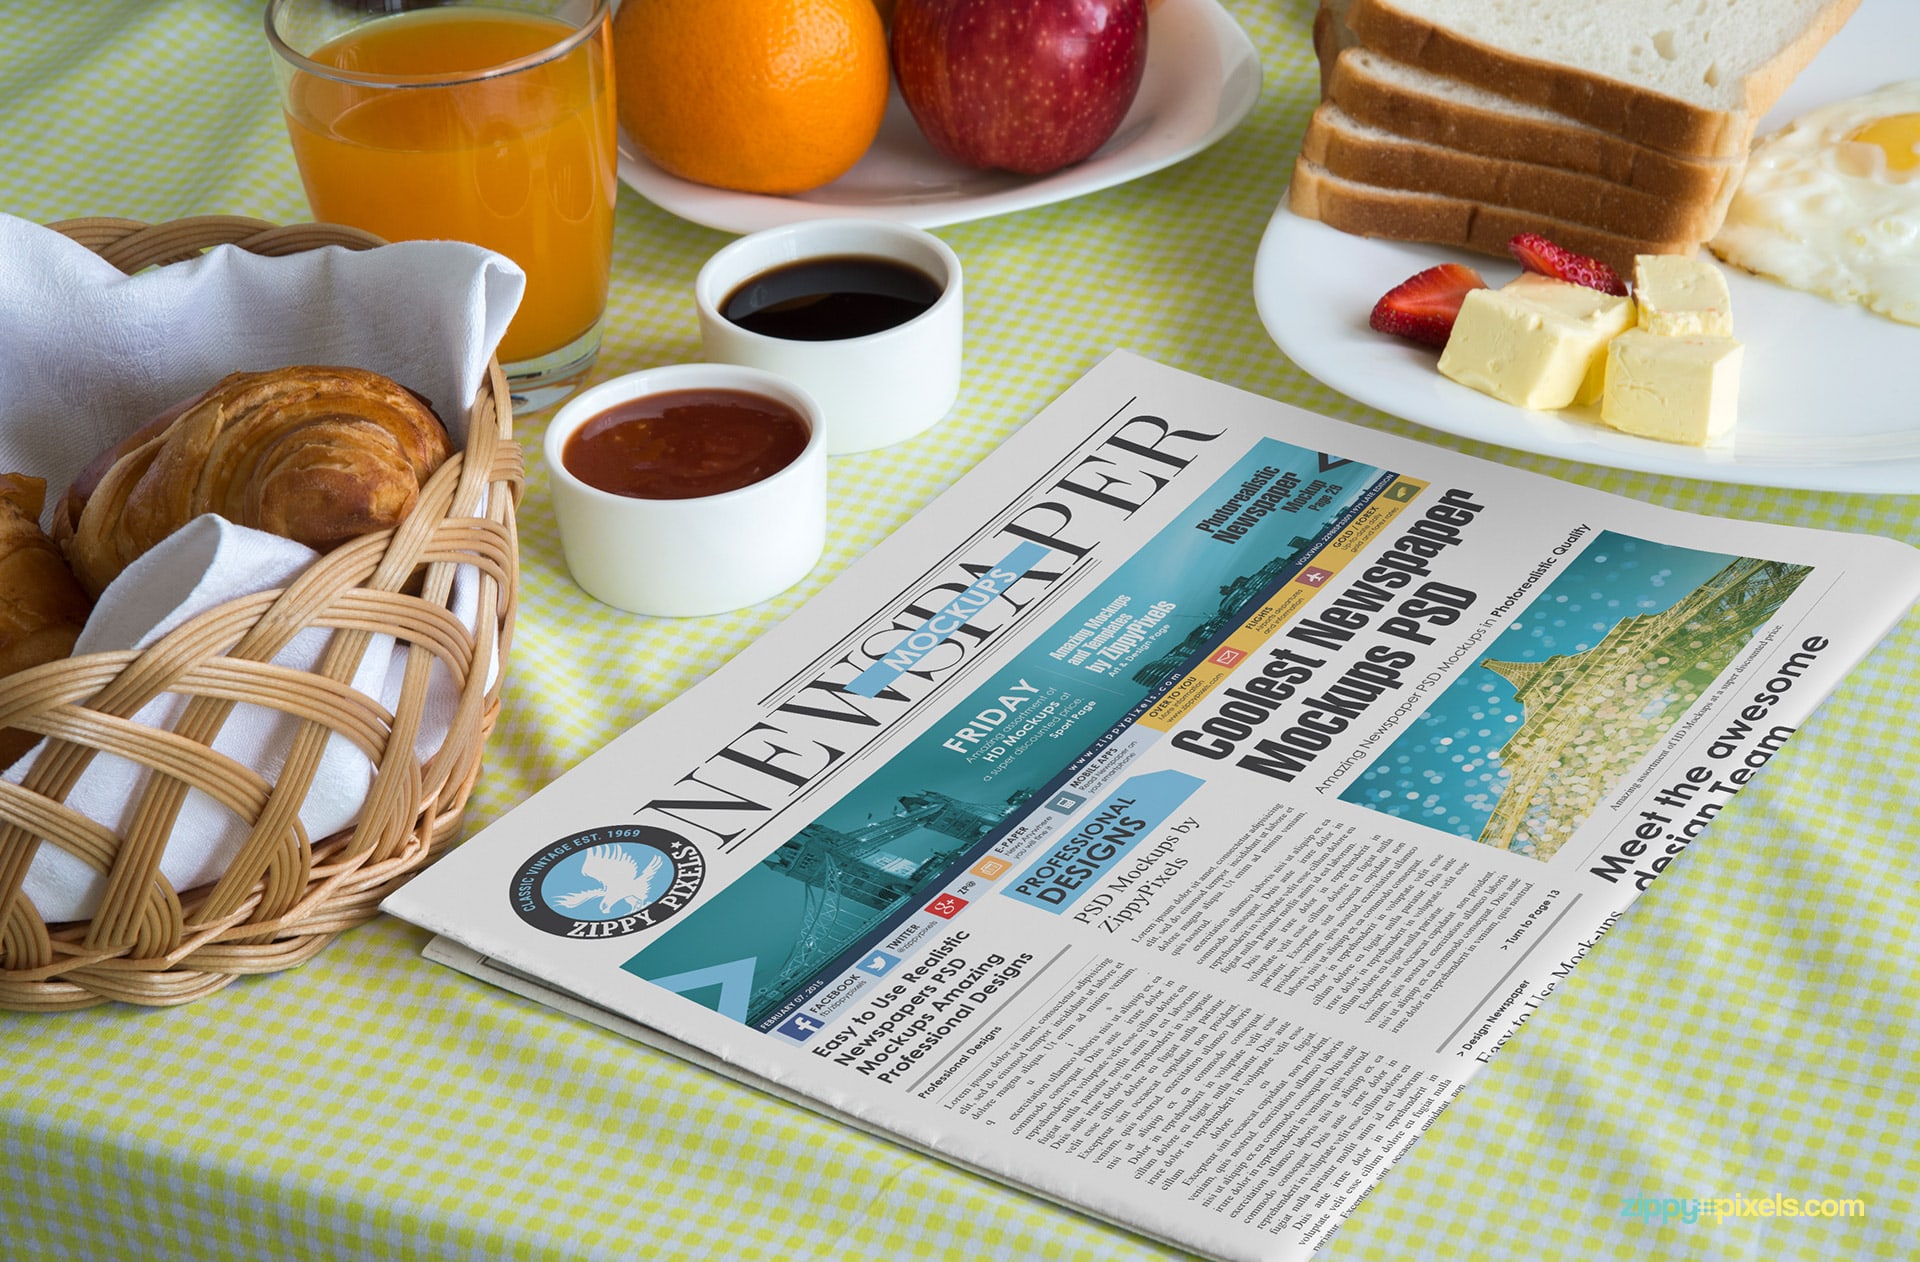 newspaper mockups for displaying newspaper design on half fold newspaper with breakfast